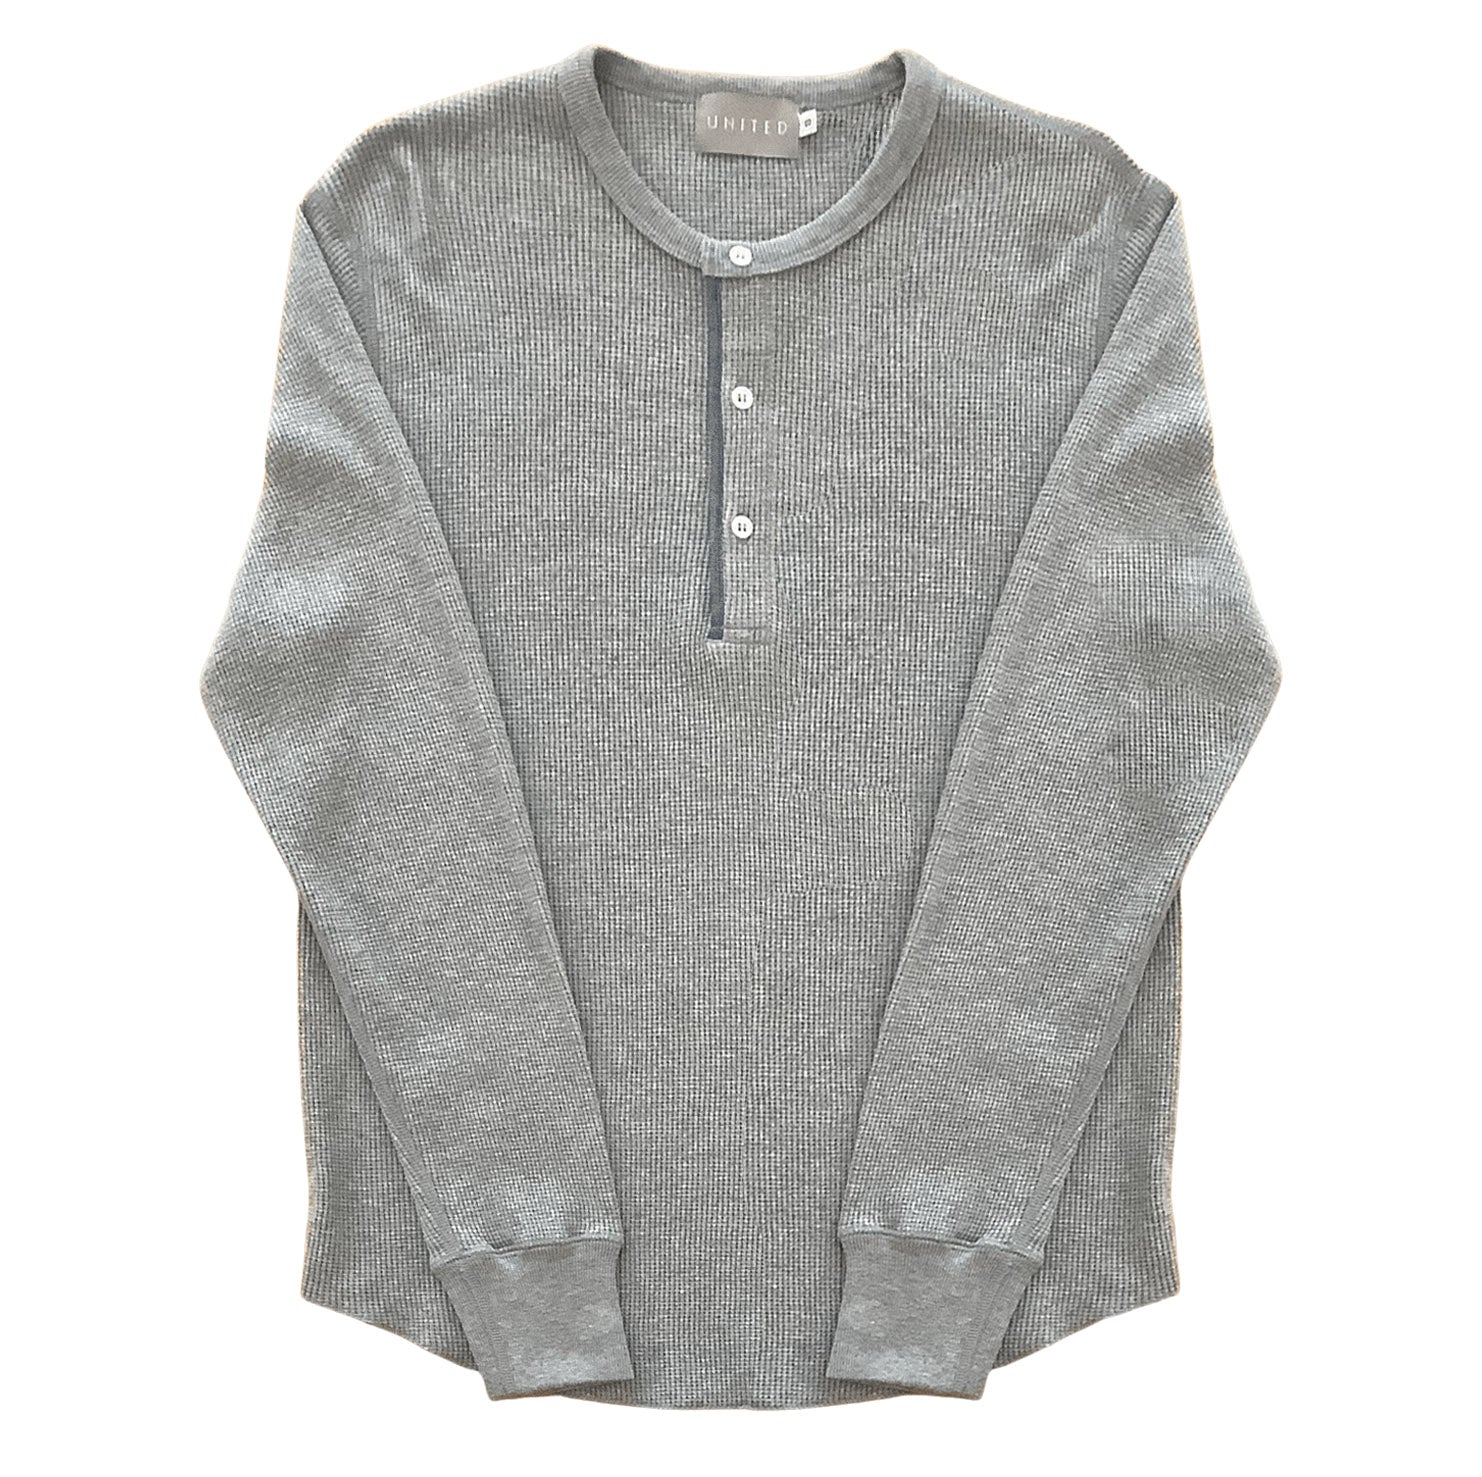 Grey 16 oz Cotton Thermal Waffle Henley T-Shirt